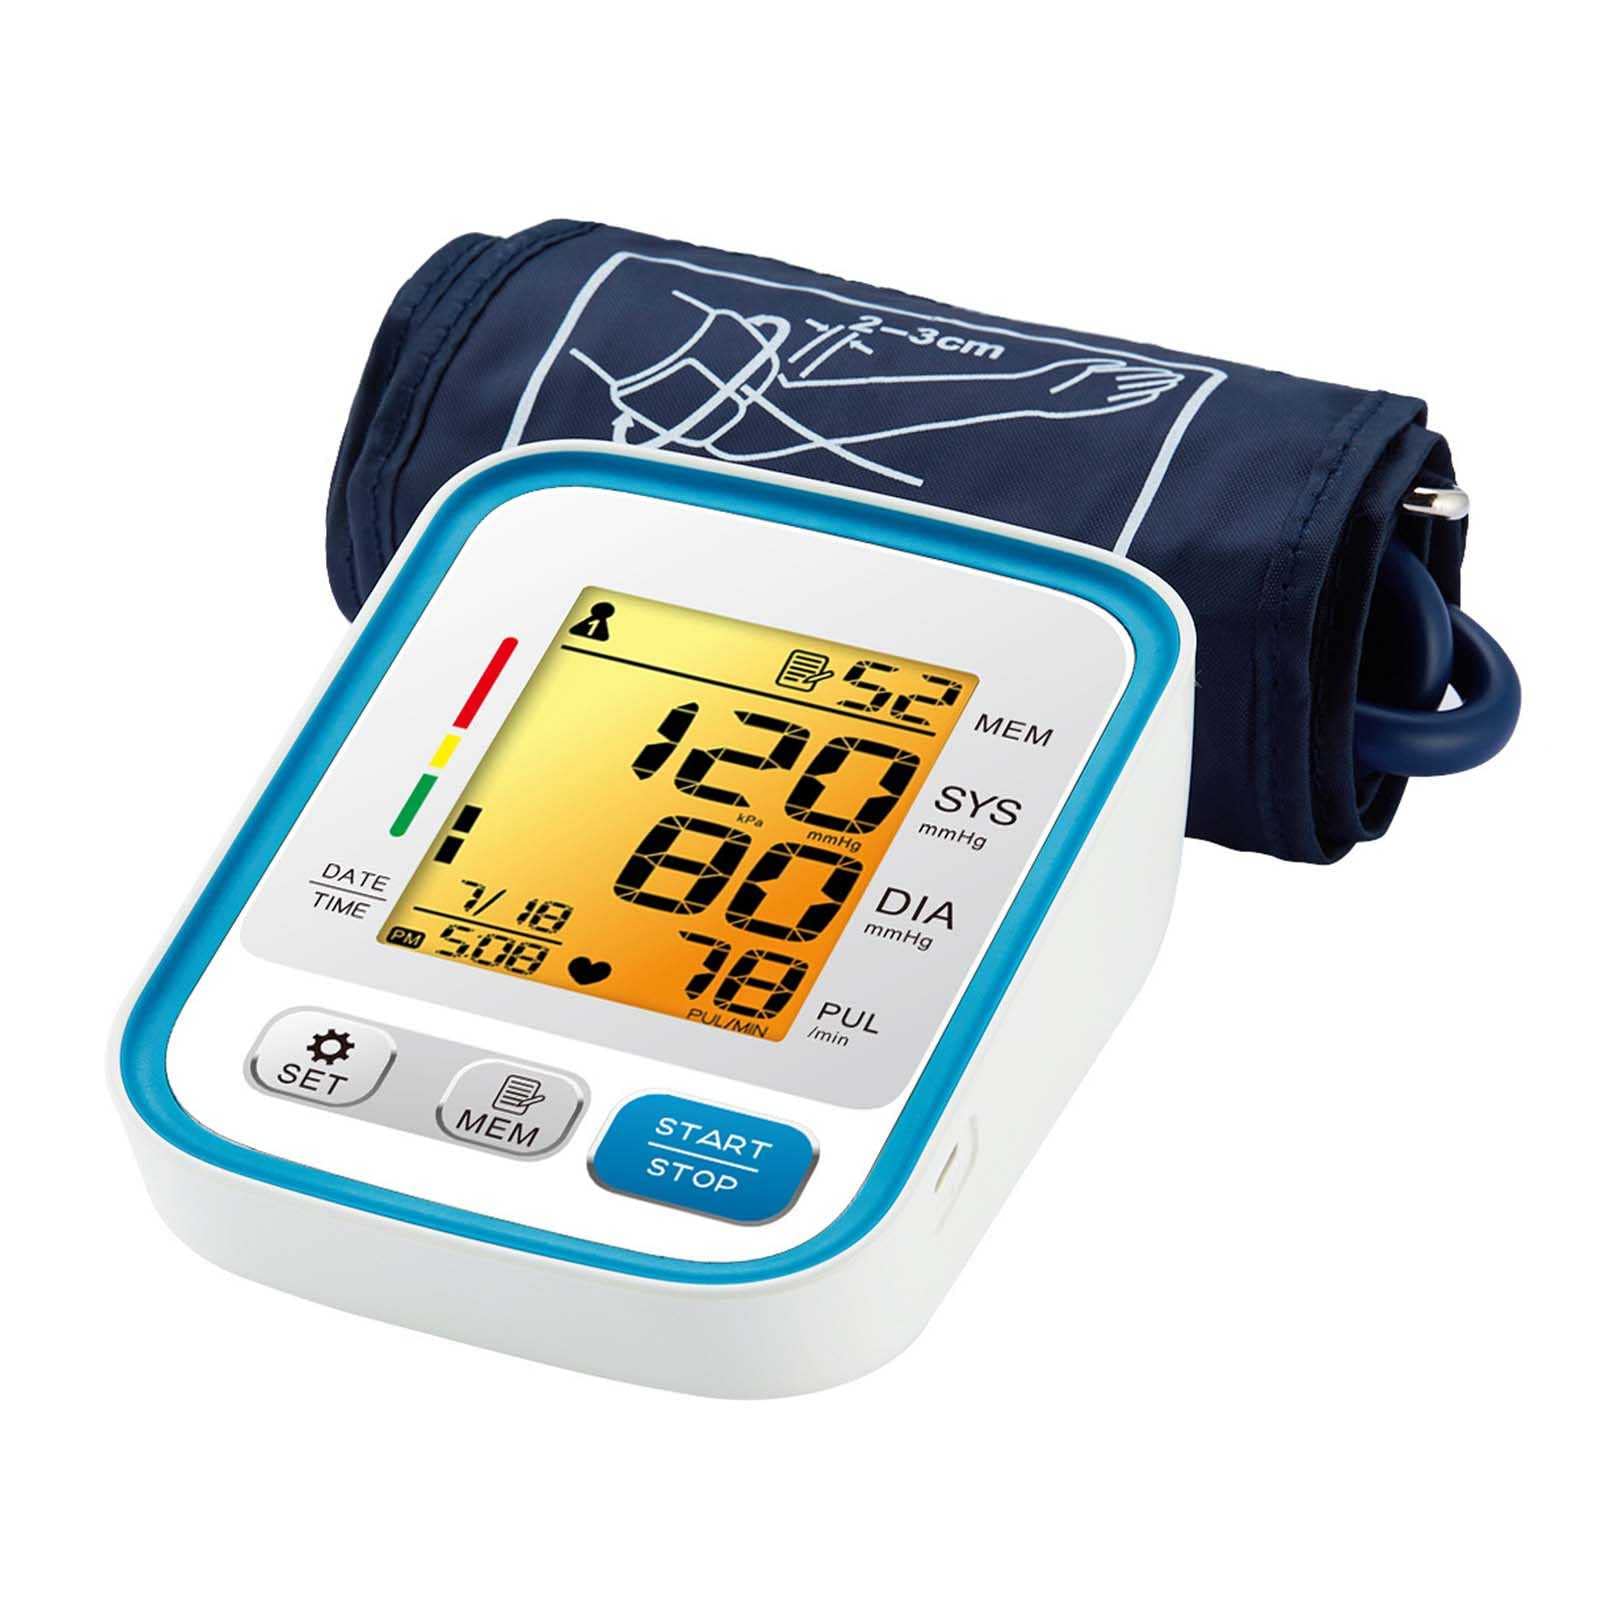 Englisches Sprachelektronik-Blutdruckmessgerät, Großbildanzeige, One-Key-Messung, Smart Boost, Arm-Heim-Blutdruckmessgerät